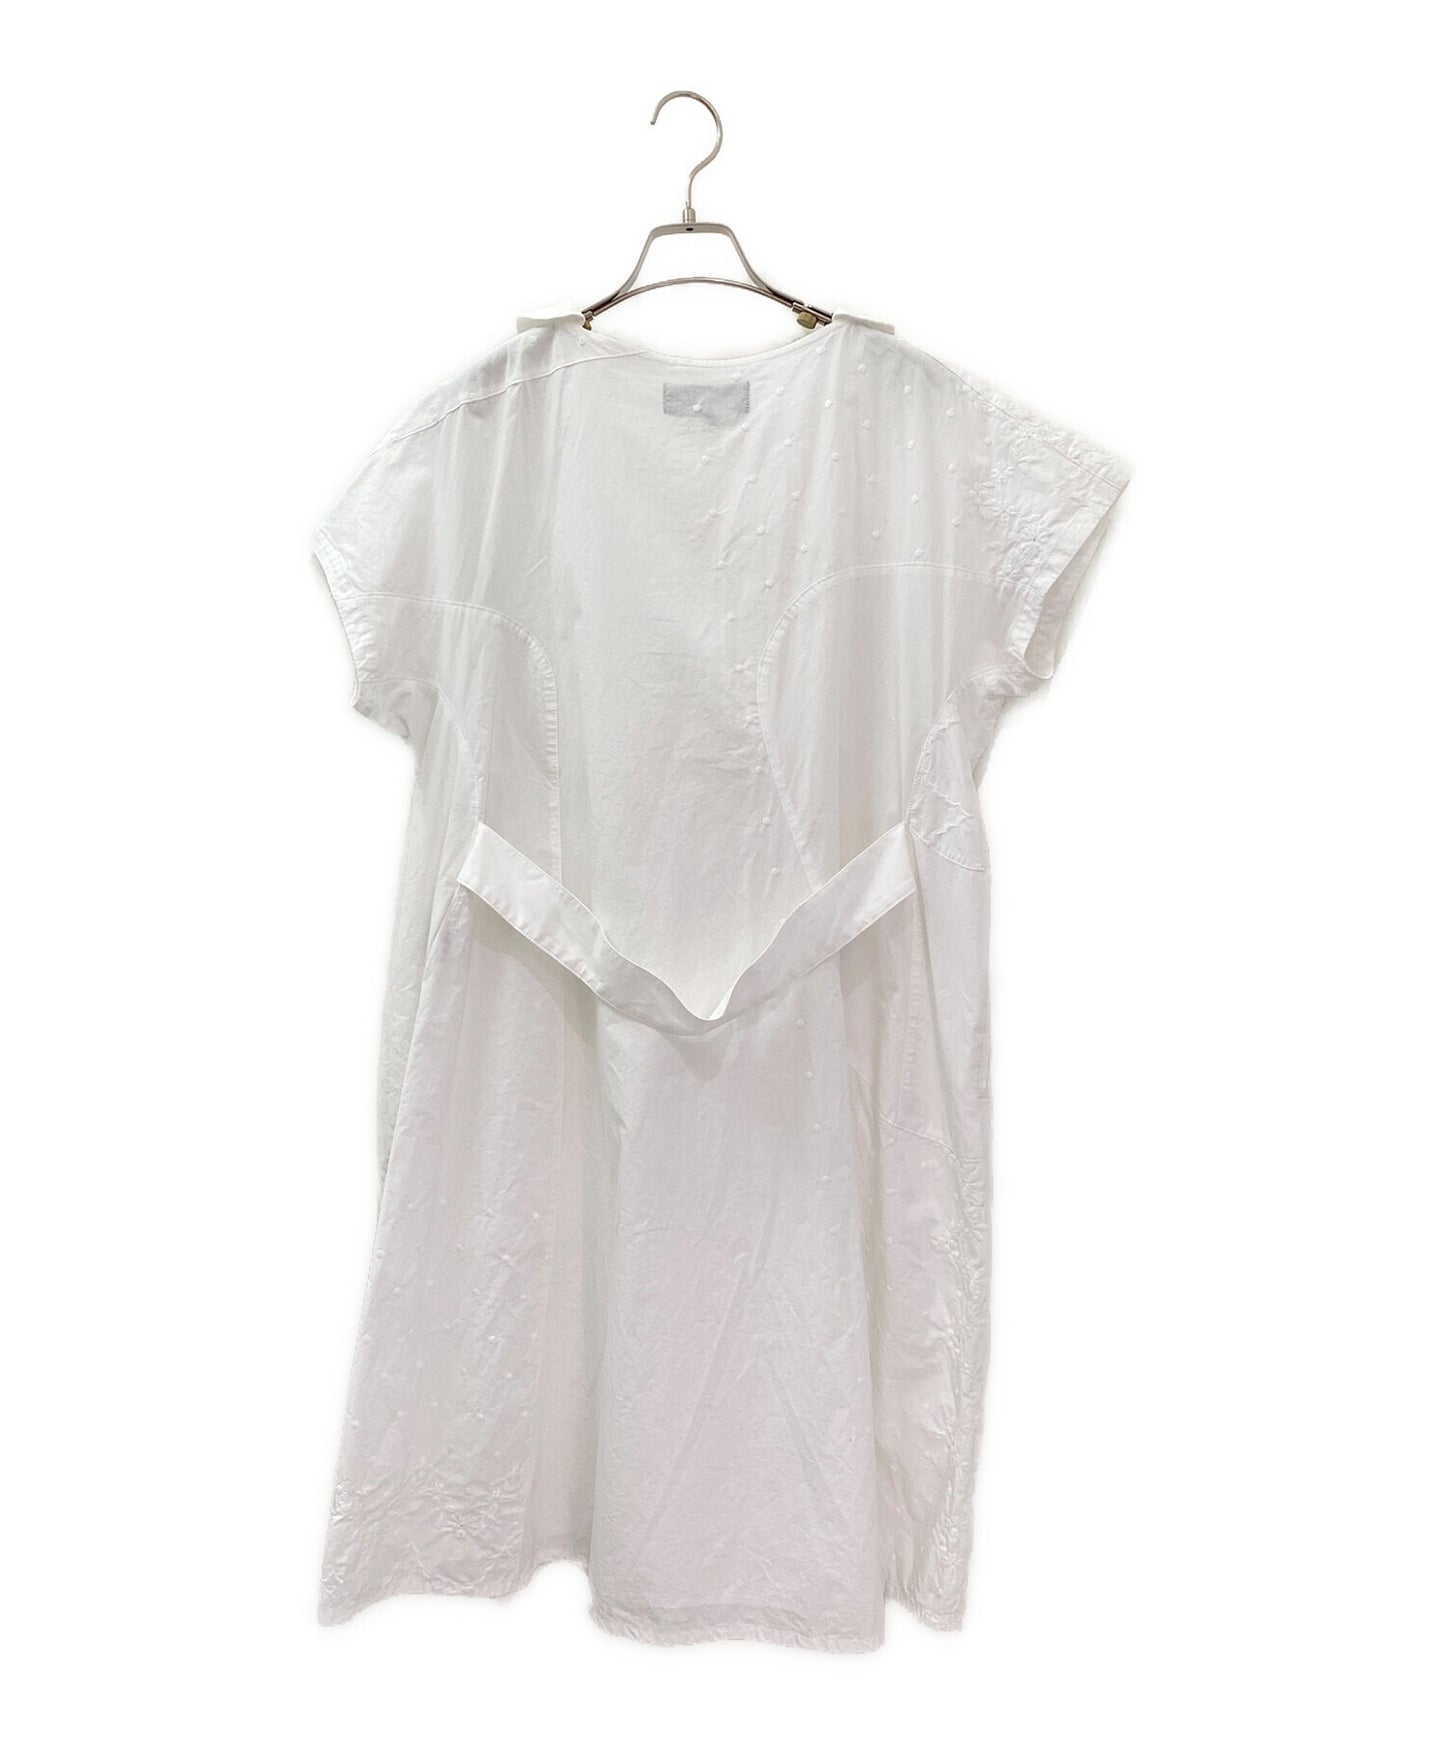 [Pre-owned] tricot COMME des GARCONS Short Sleeve Design Dress TG-0018